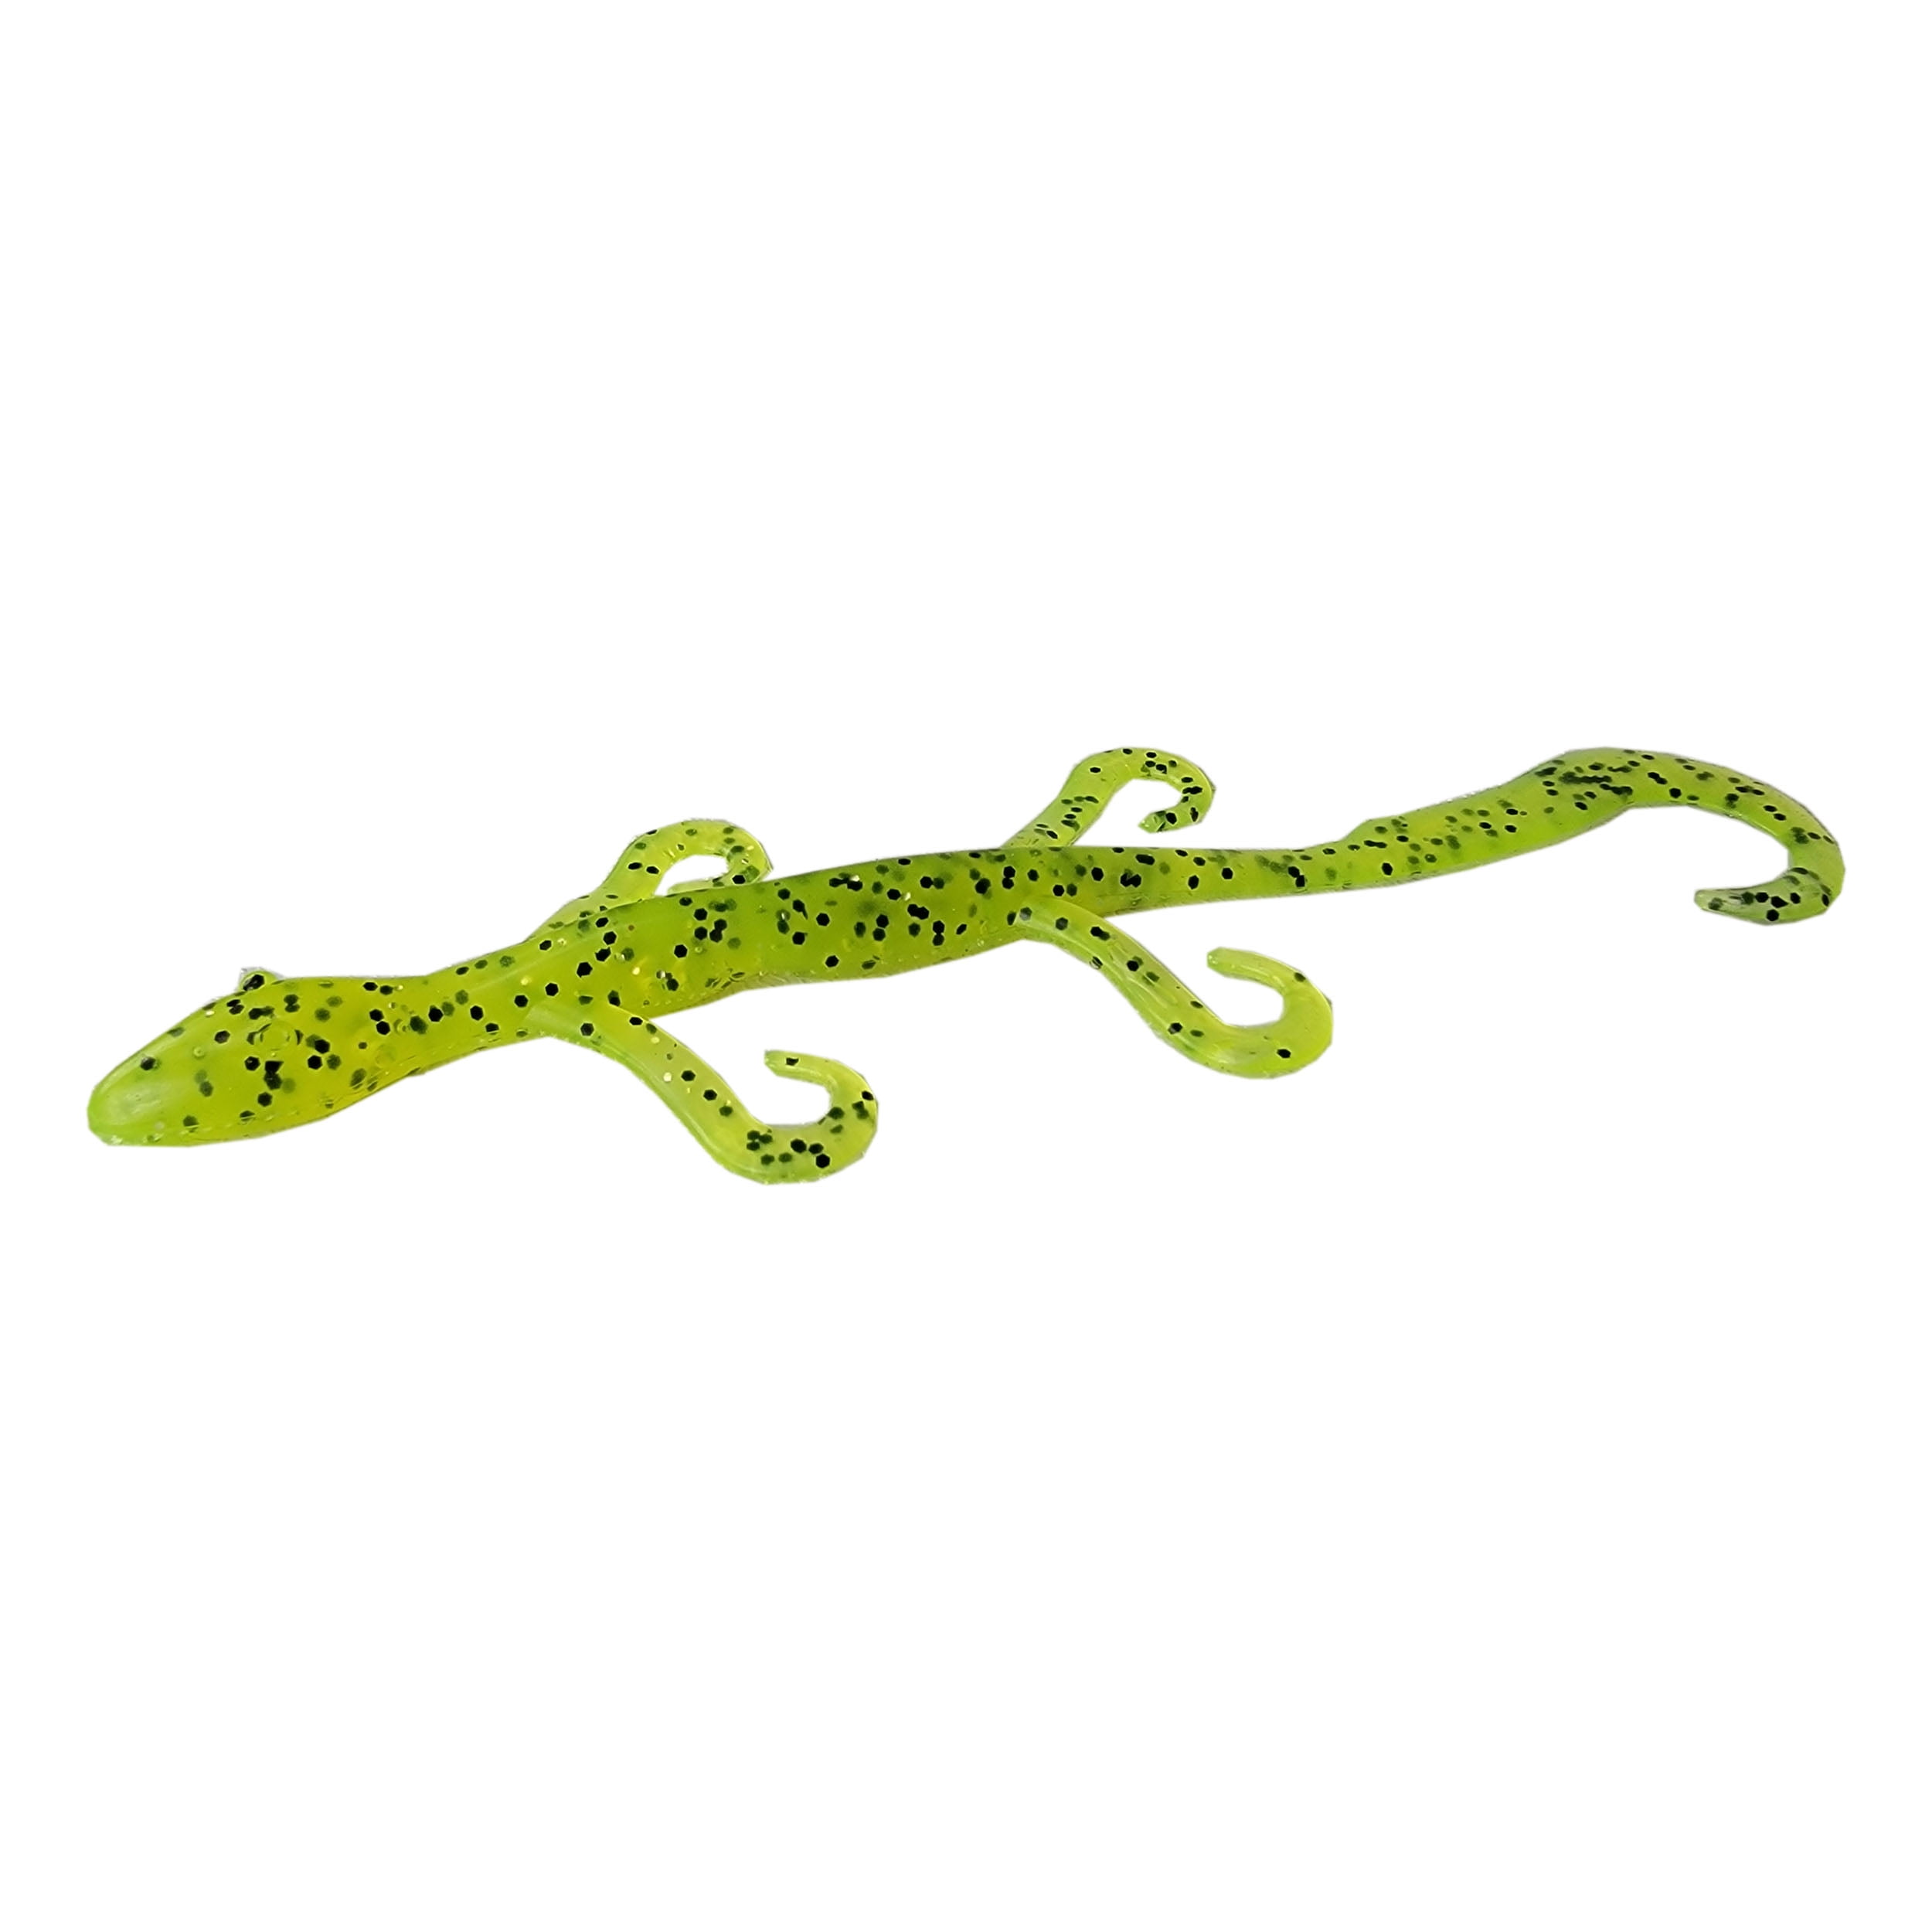 Tackle HD 12-Pack Lizard Fishing Lure, 6-Inch Soft Plastic Fishing